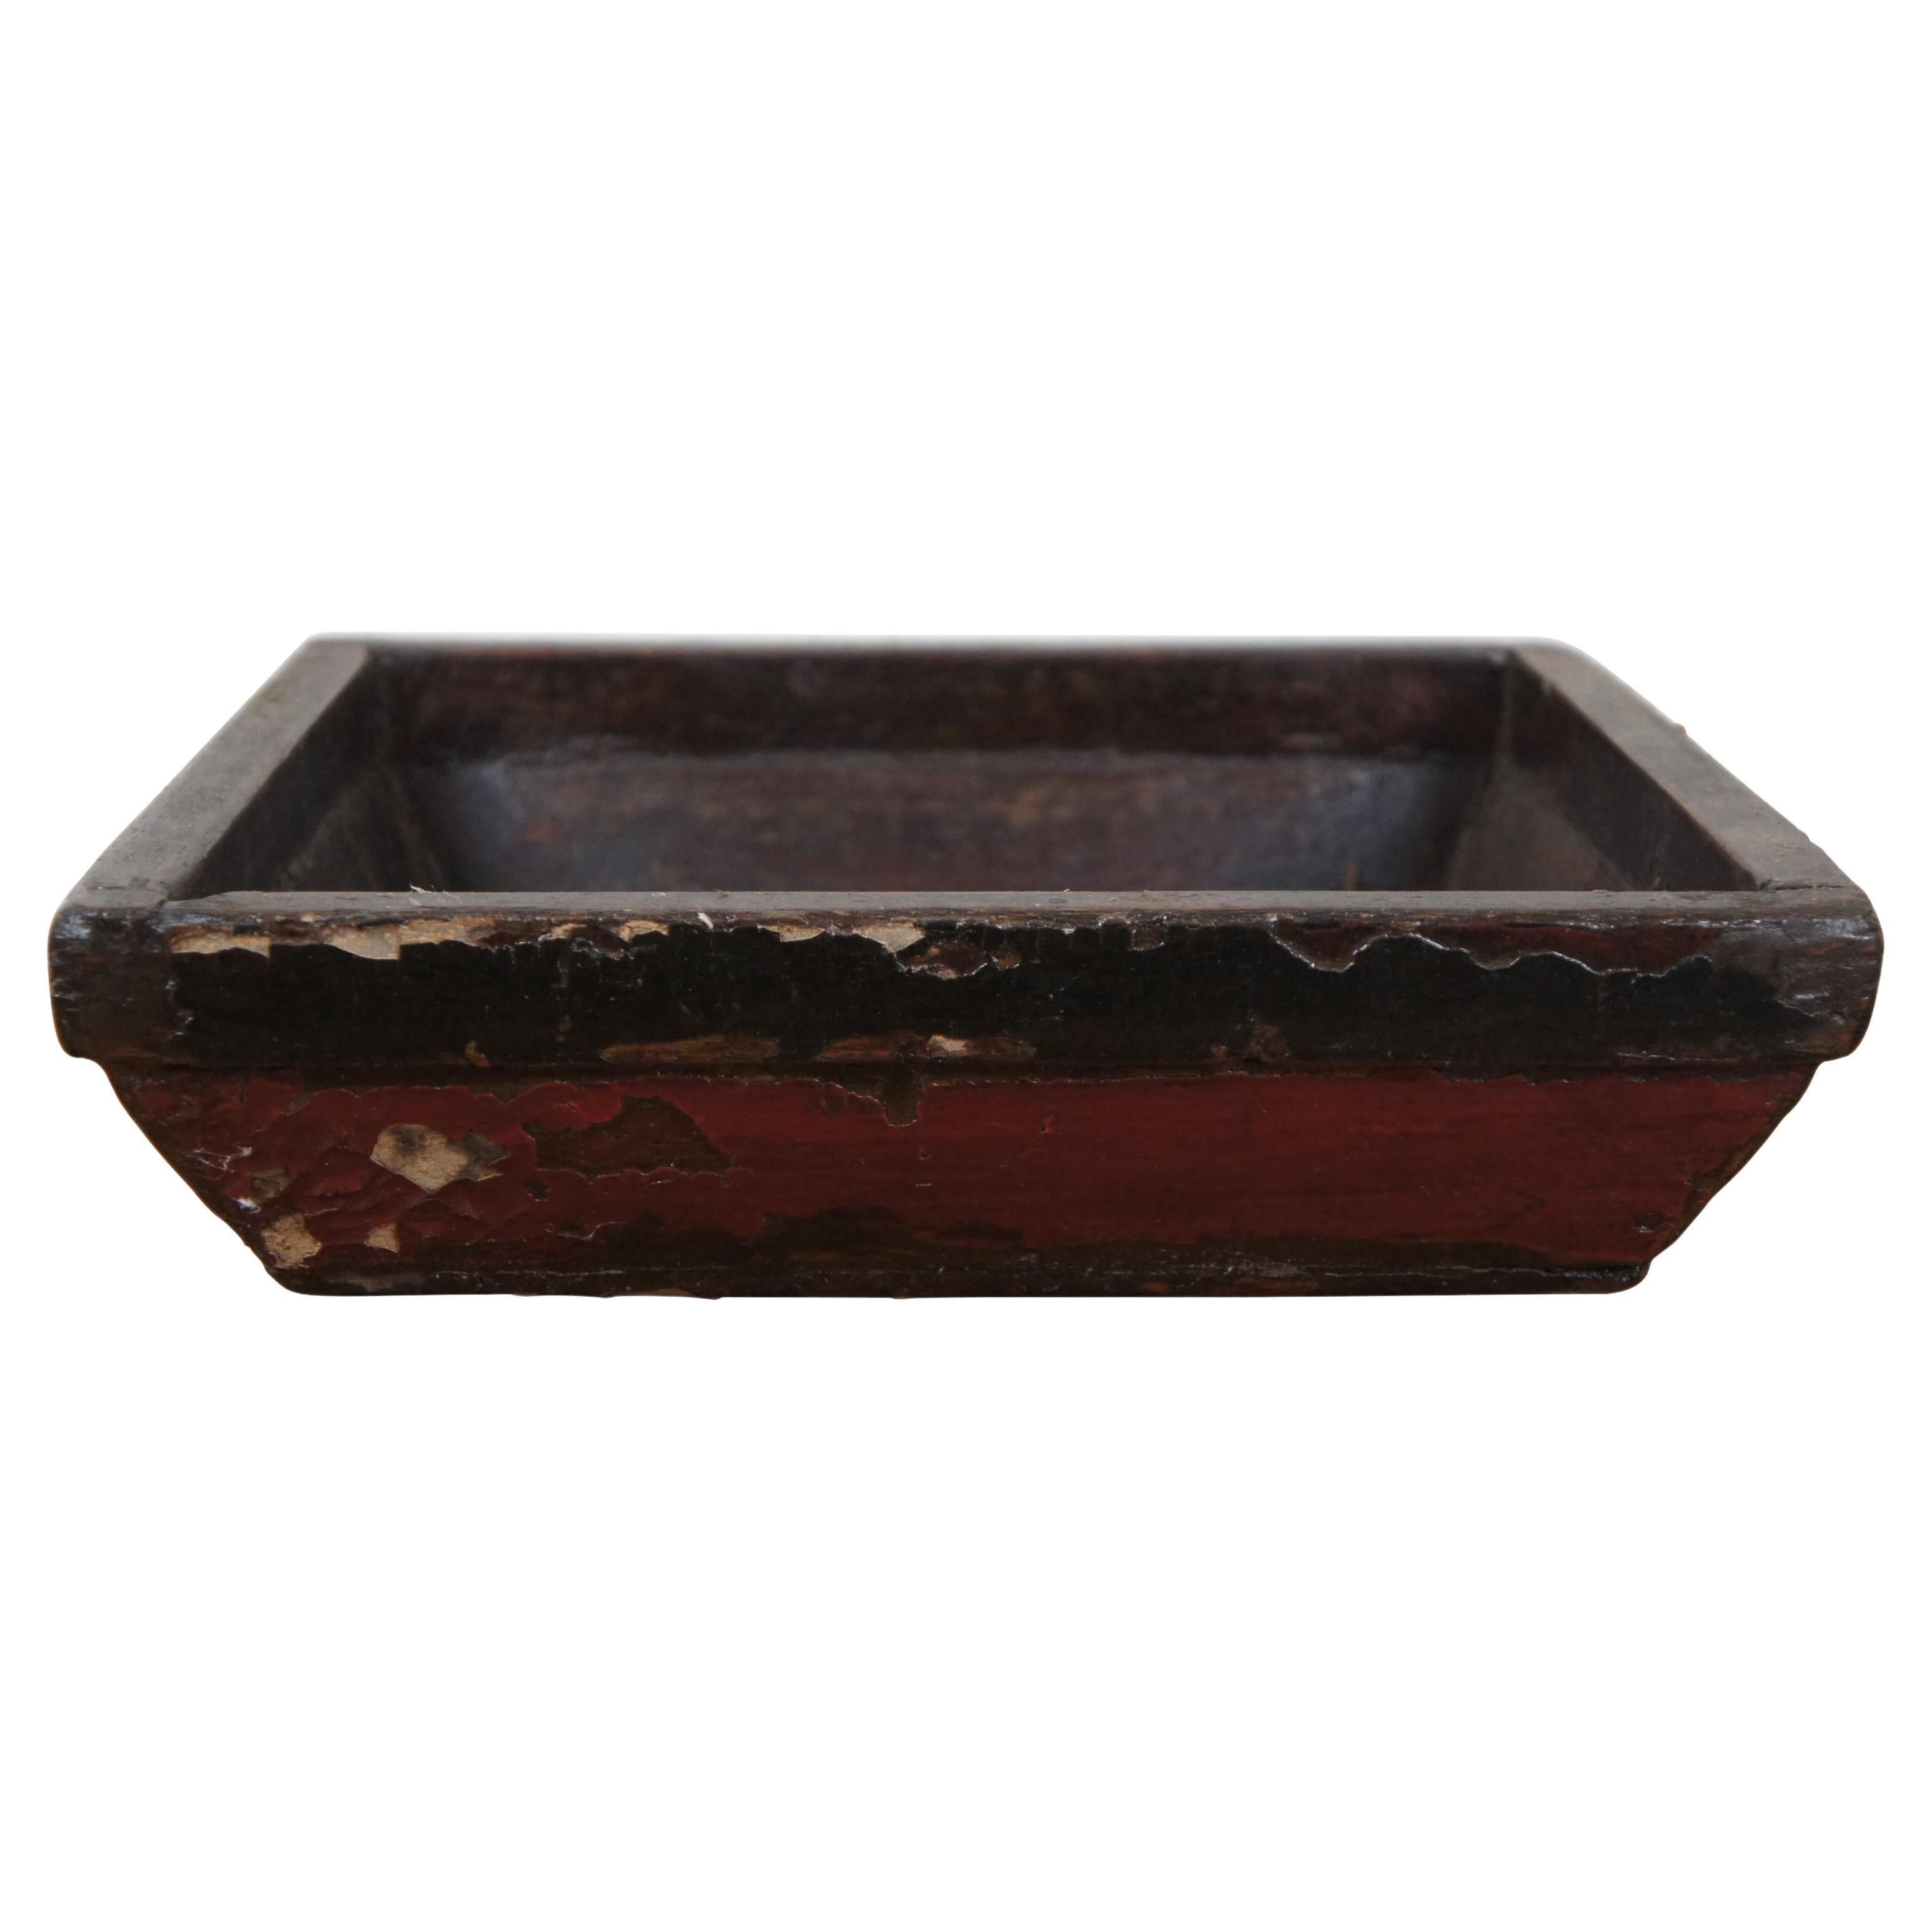 Antique Japanese Lacquered Square Wood Bowl Tray Bonsai Pot Planter 14"